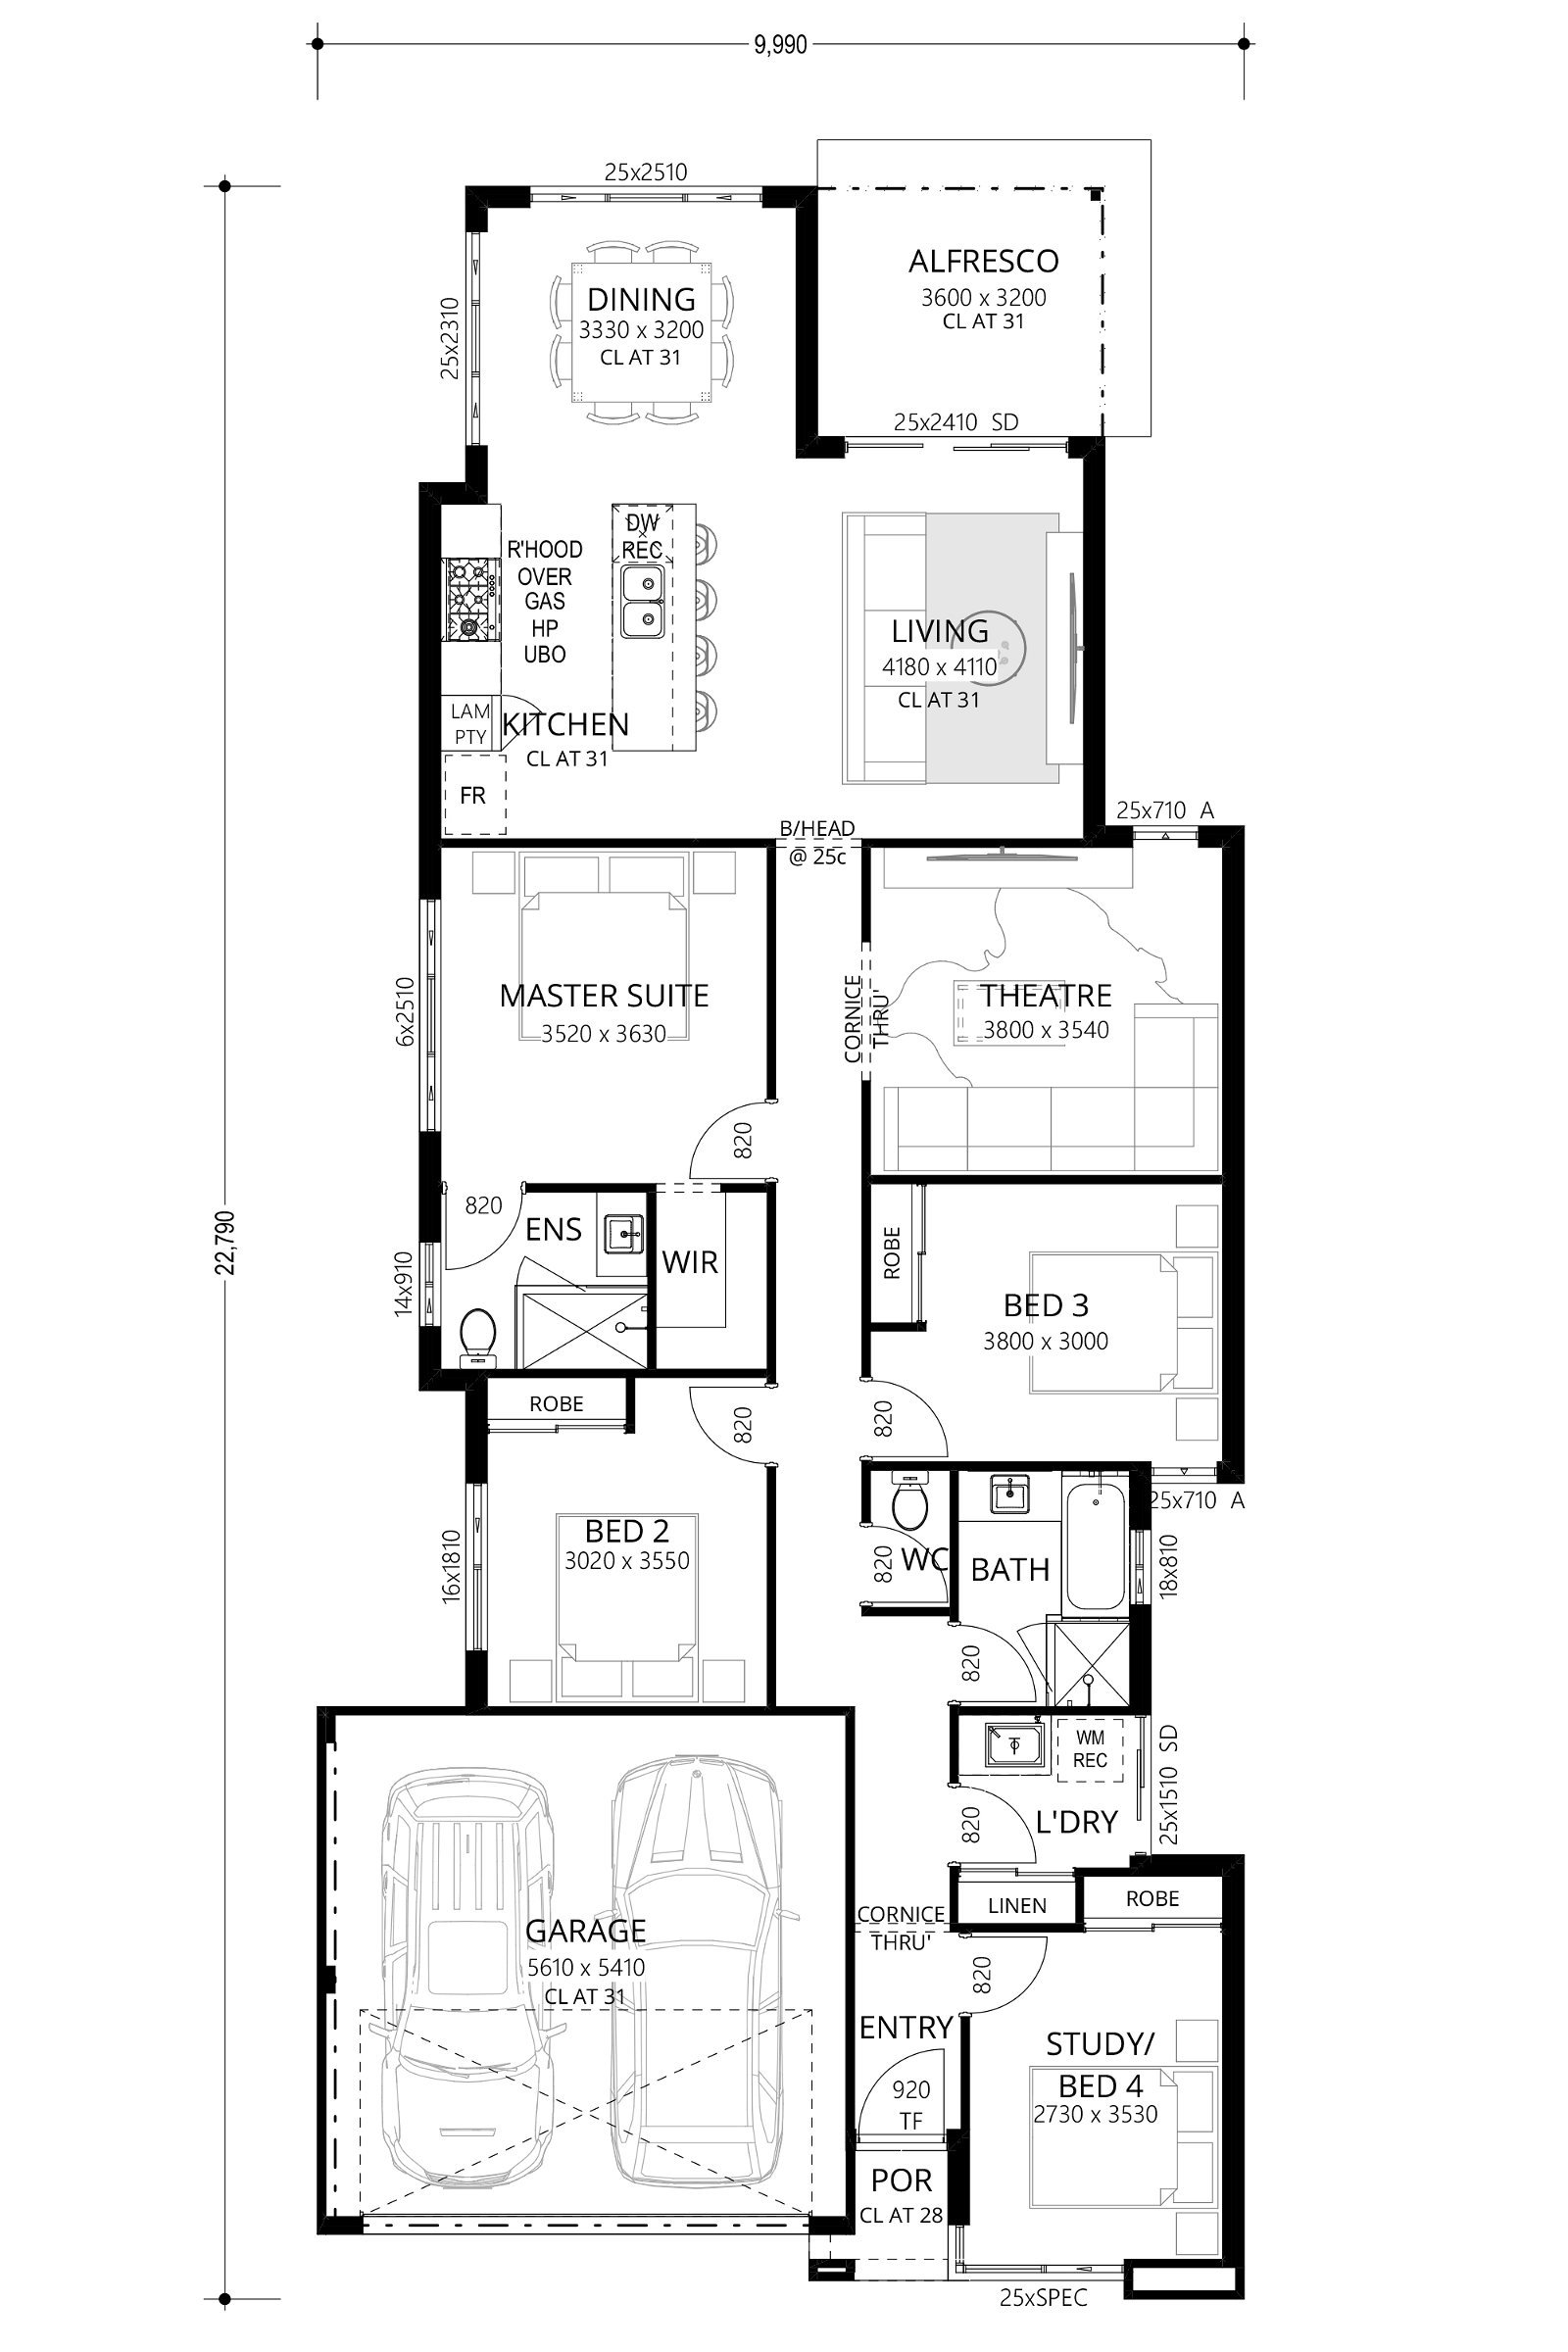 Residential Attitudes - House Head - Floorplan - House Head Floorplan Website